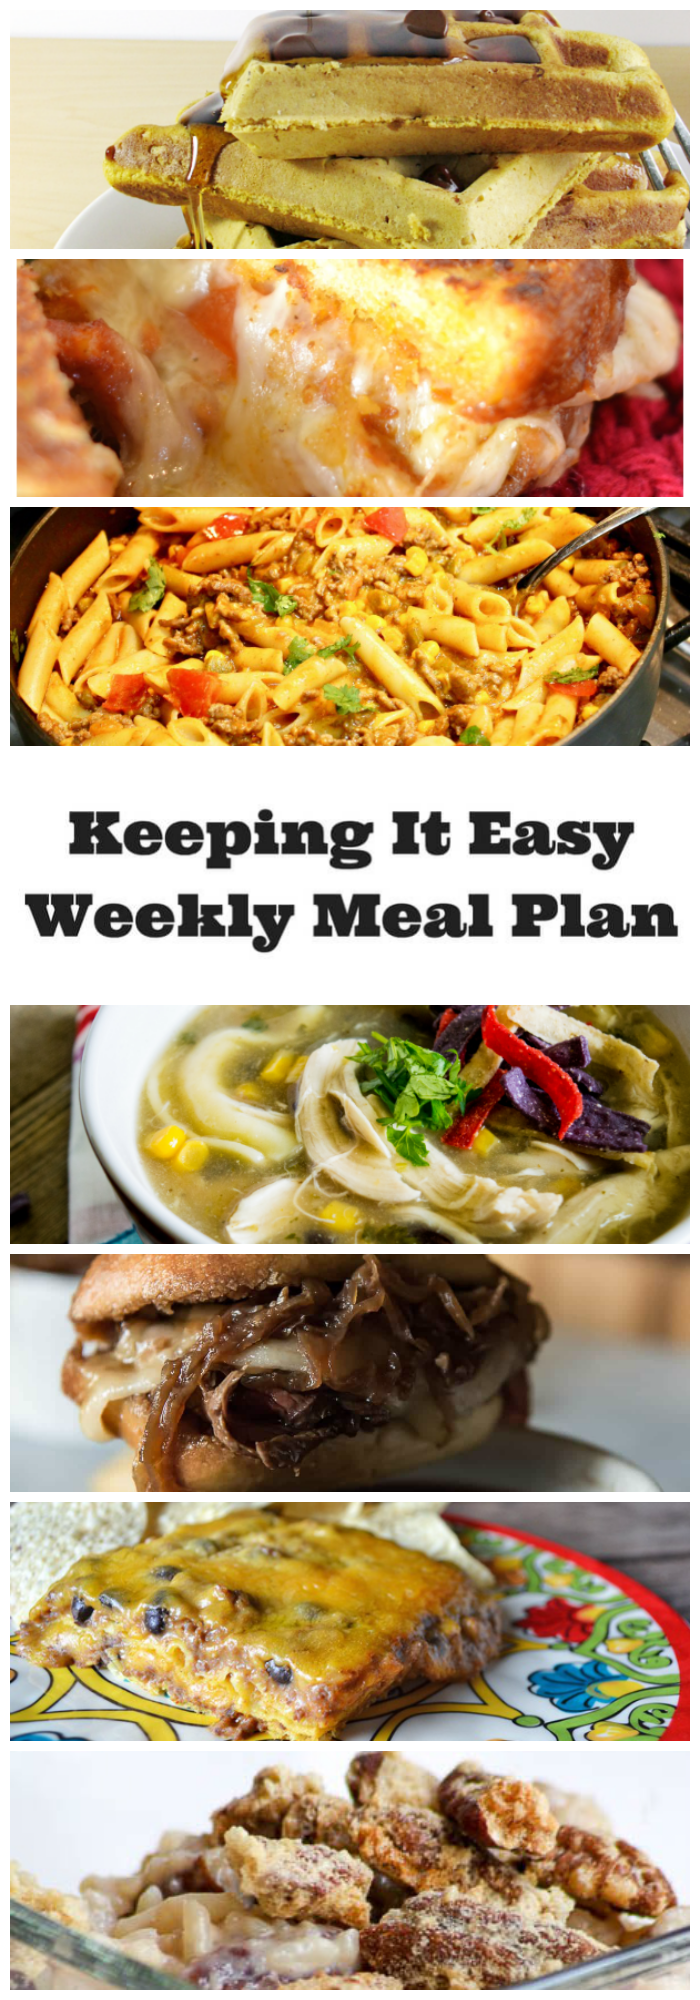 November Meal Plan ideas for your dinner inspiration.